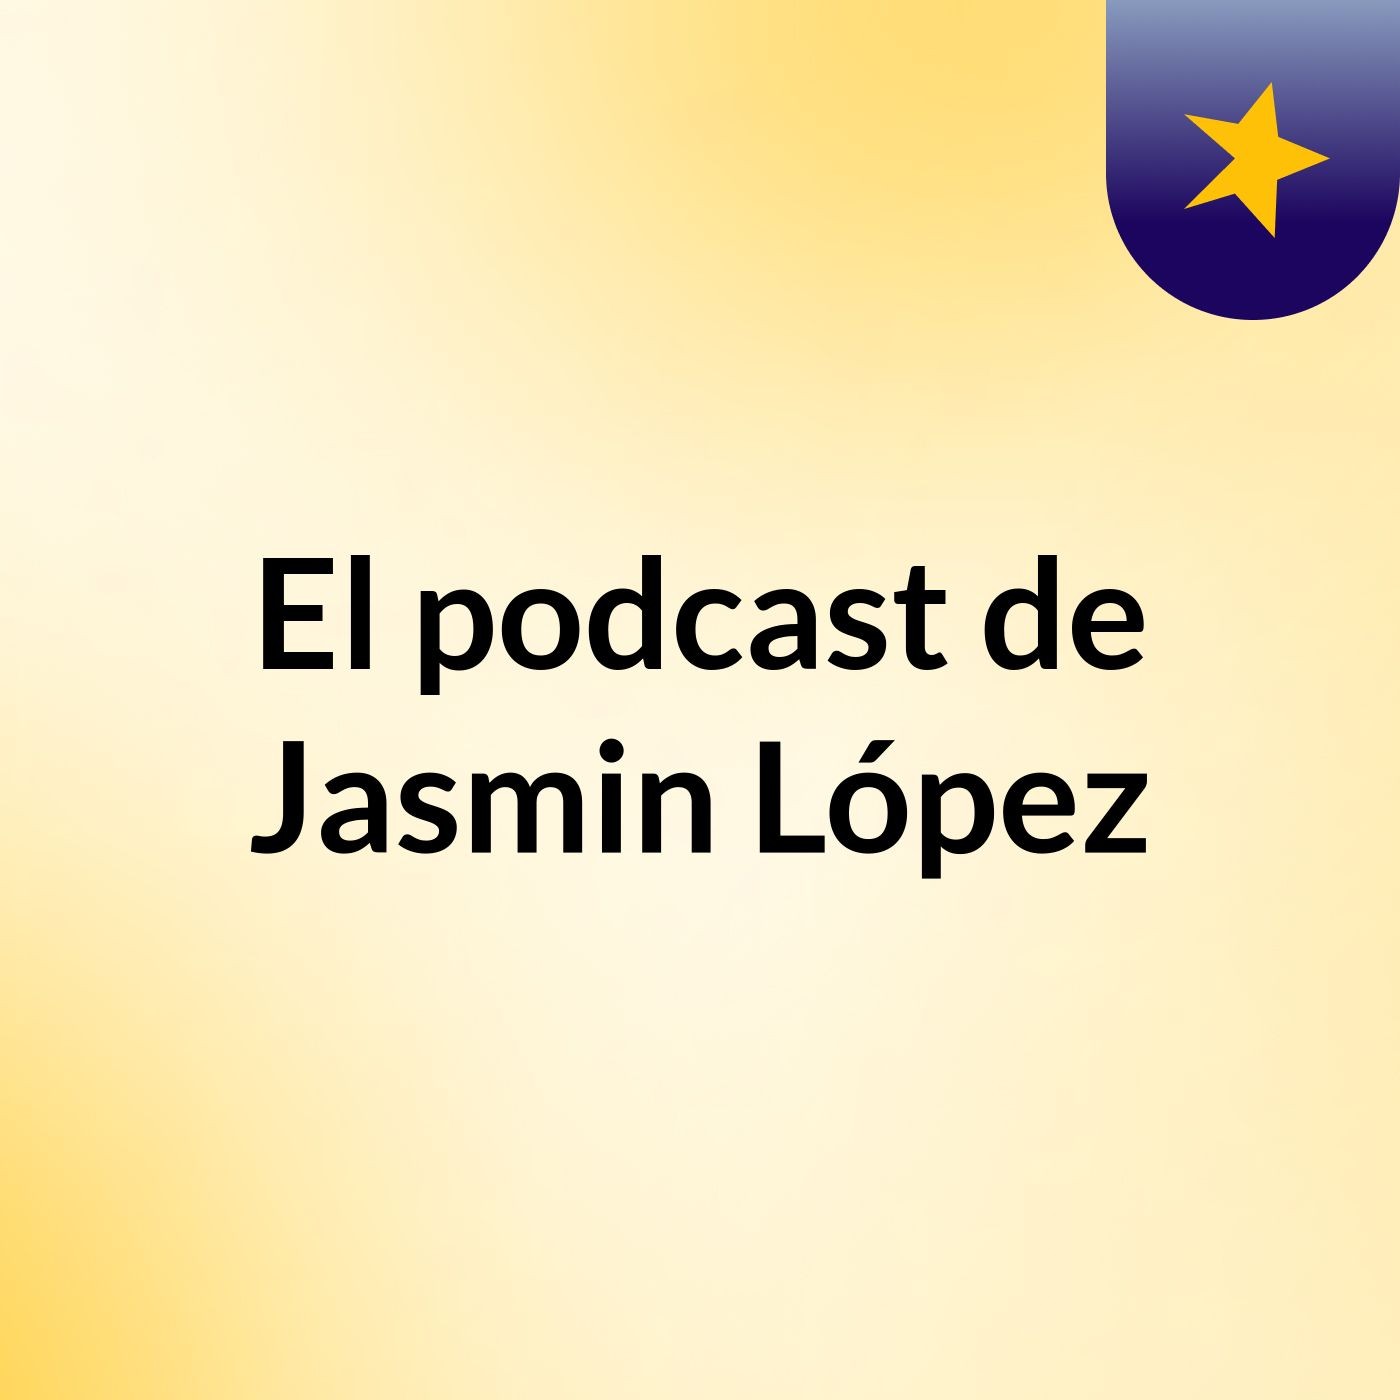 El podcast de Jasmin López